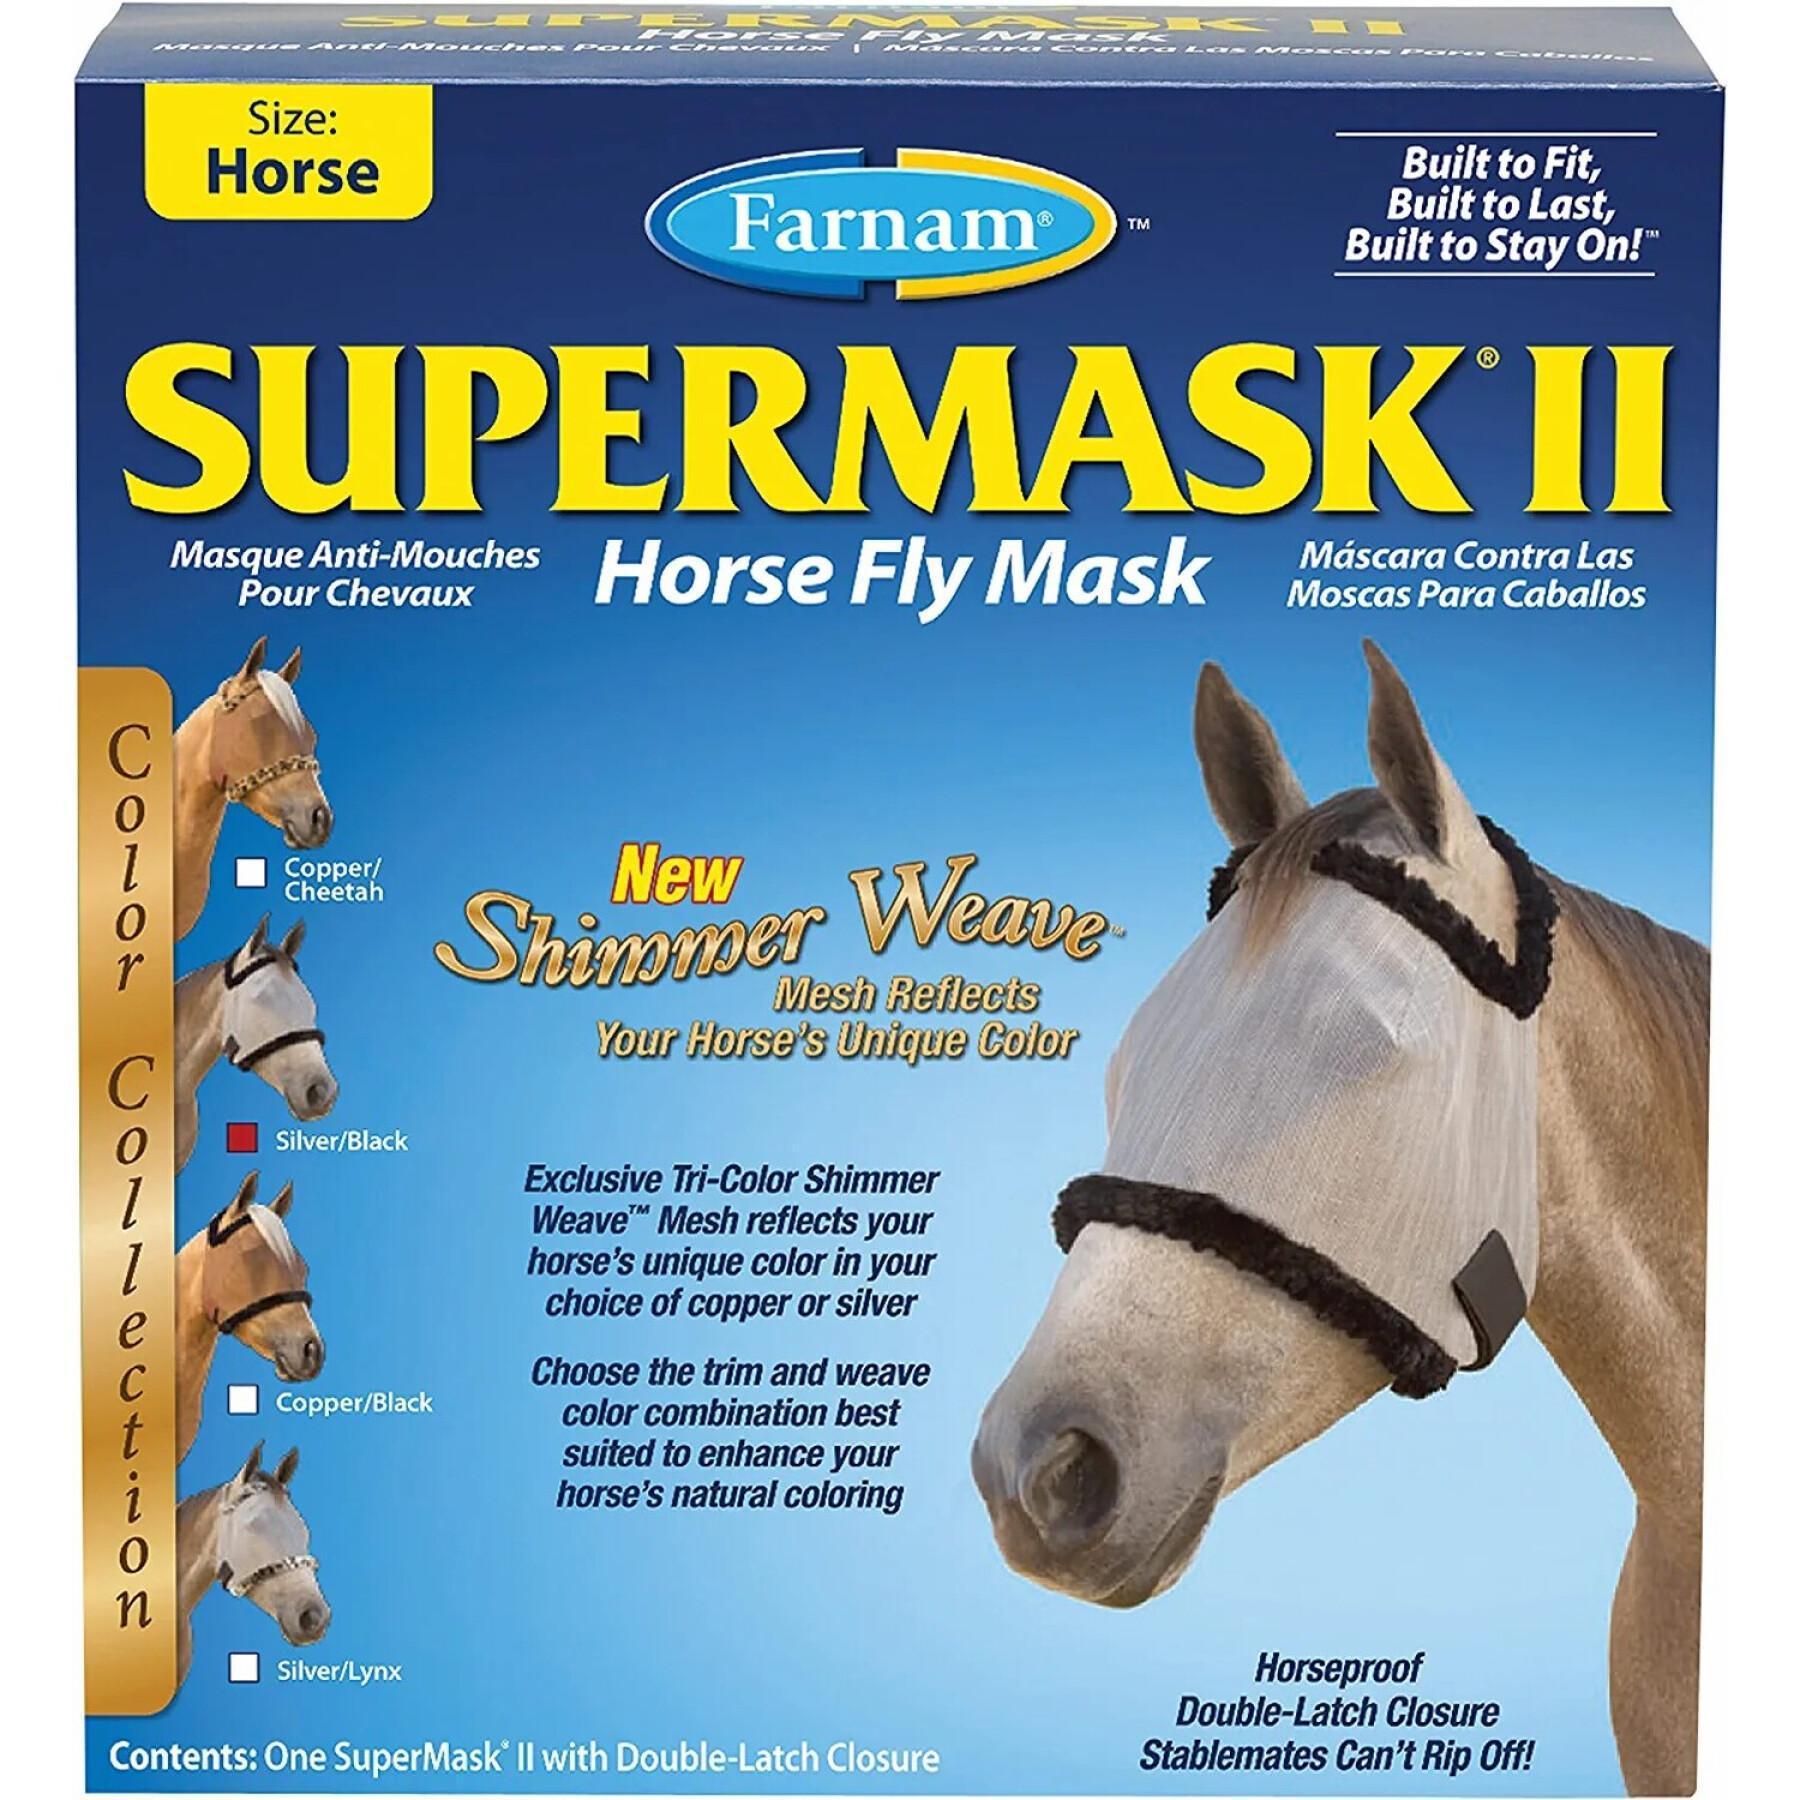 Masque anti-mouches pour cheval avec oreilles Farnam Supermask II Horse horse